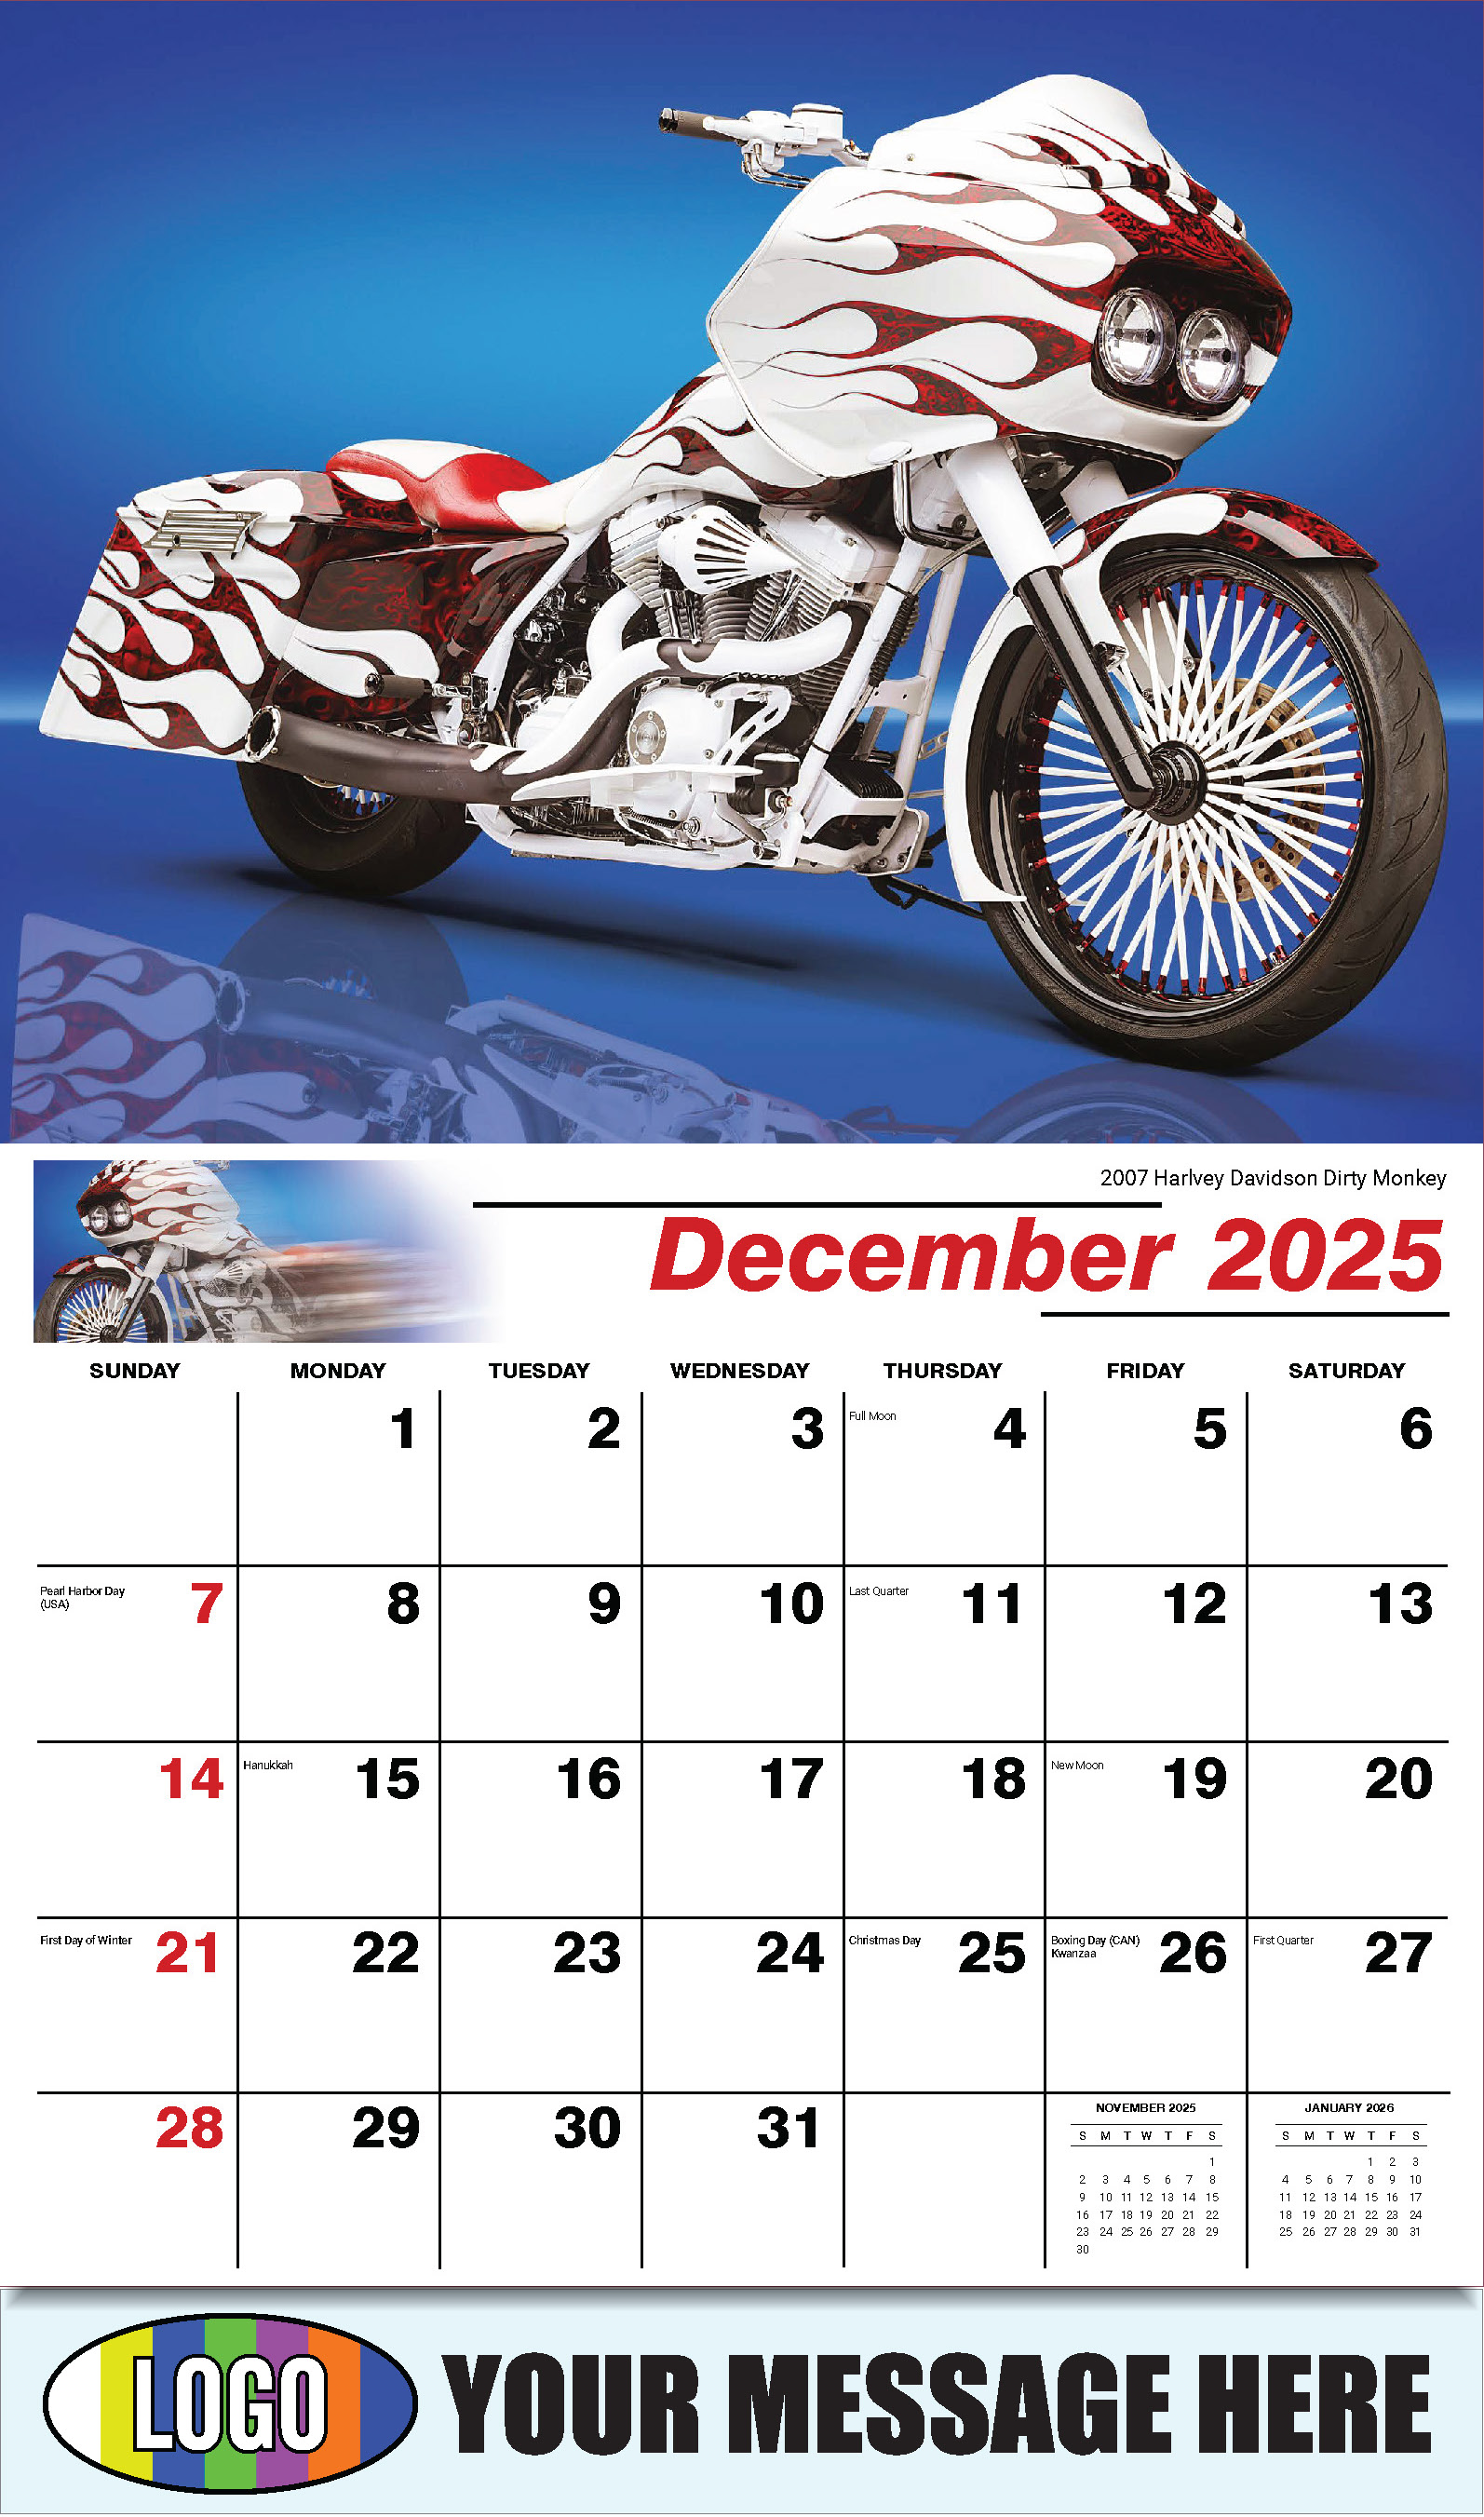 Motorcycle Mania 2025 Automotve Business Advertising Wall Calendar - December